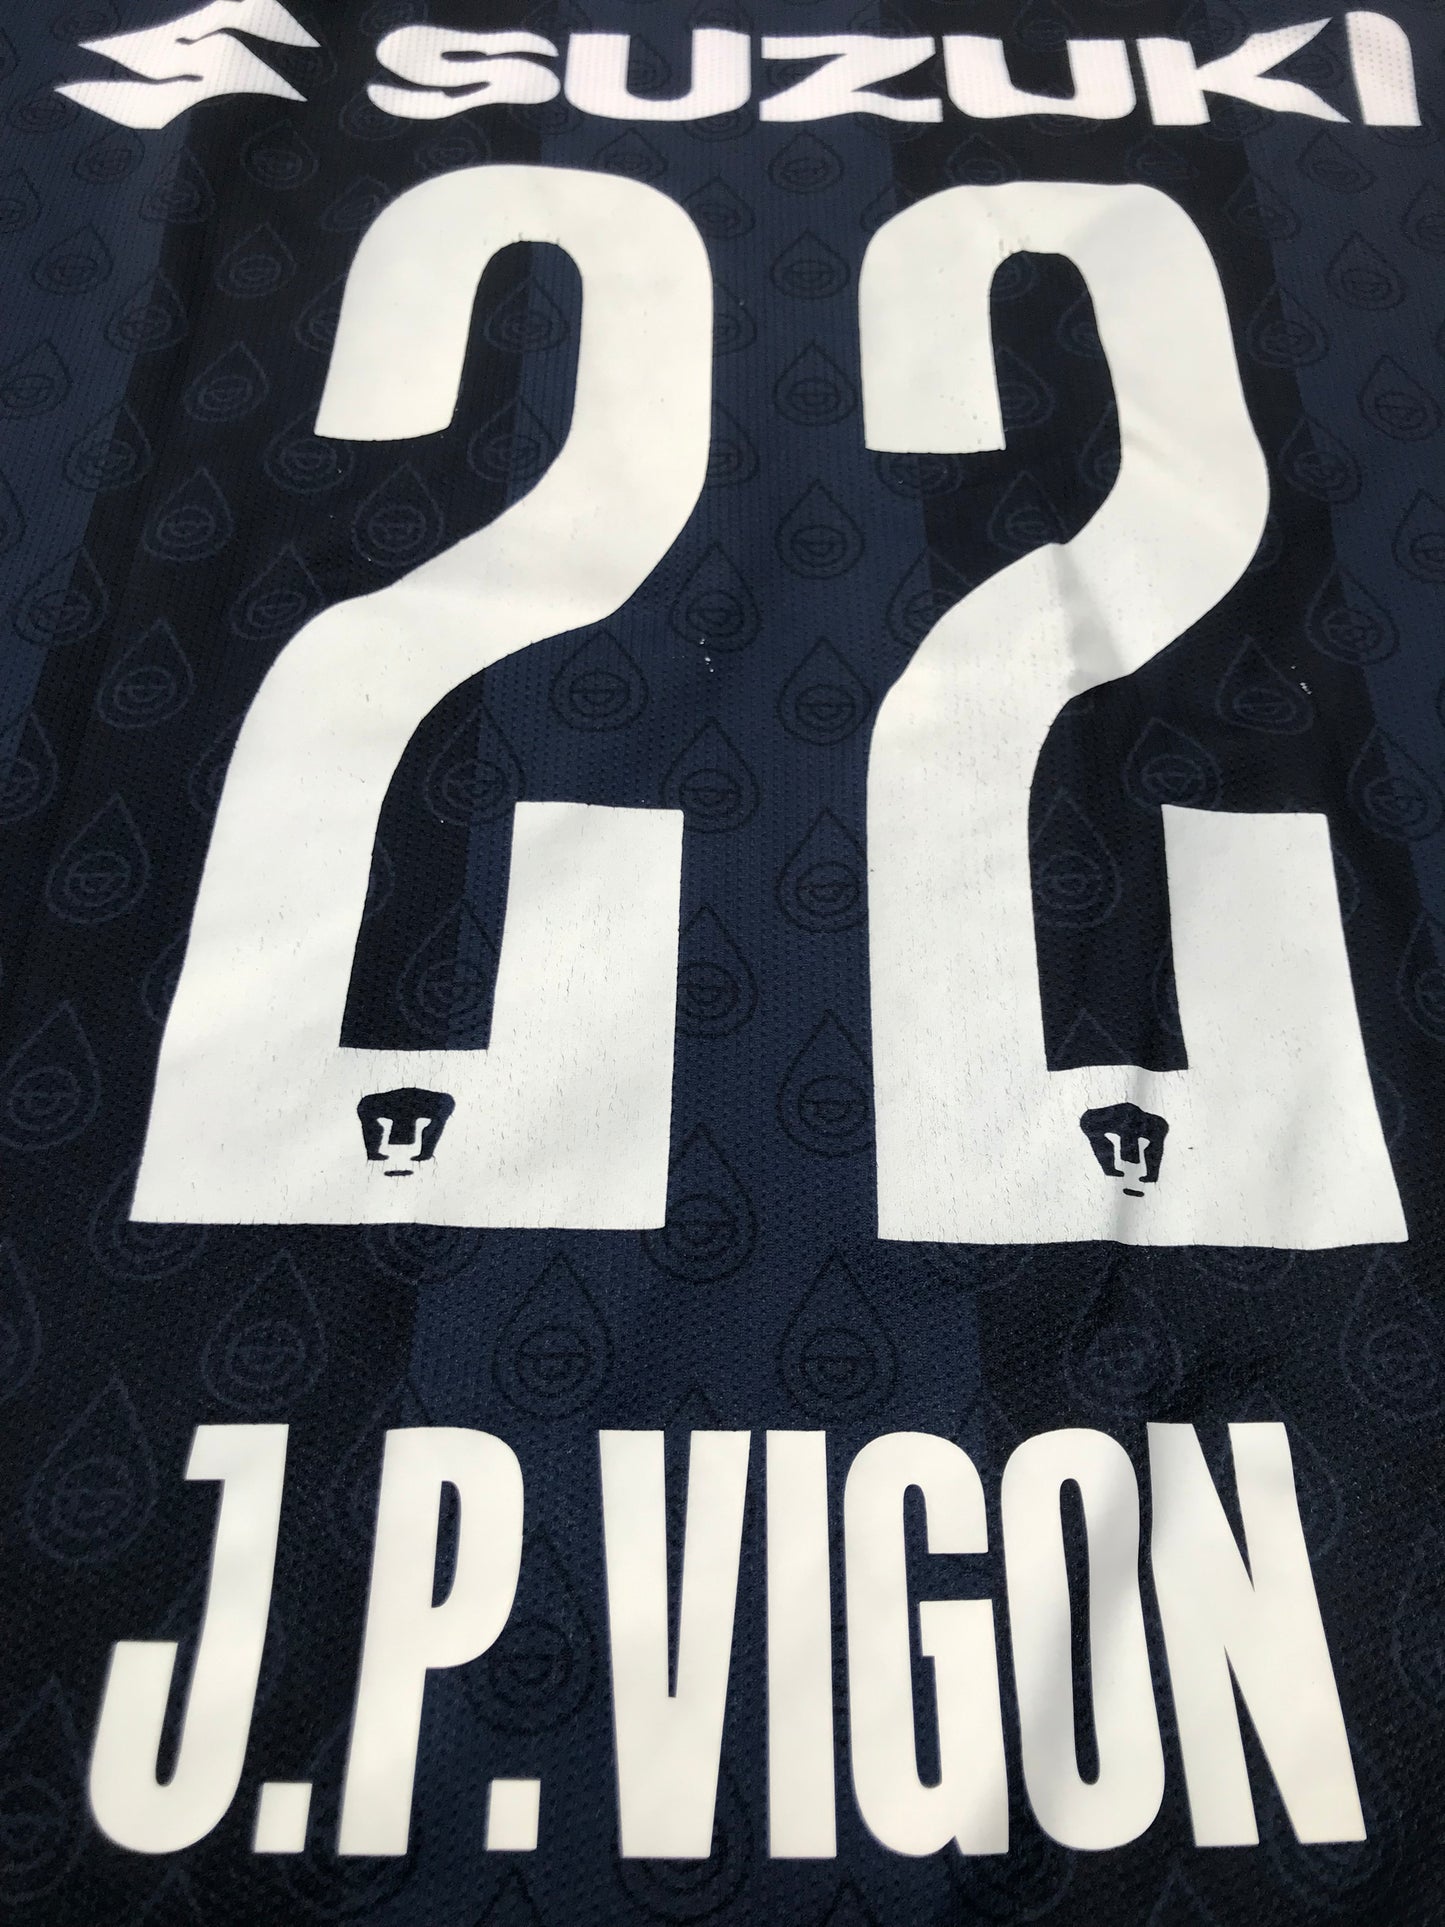 Jersey Pumas Visita 2019 2020 Juan Pablo Vigón Match Worn (M)